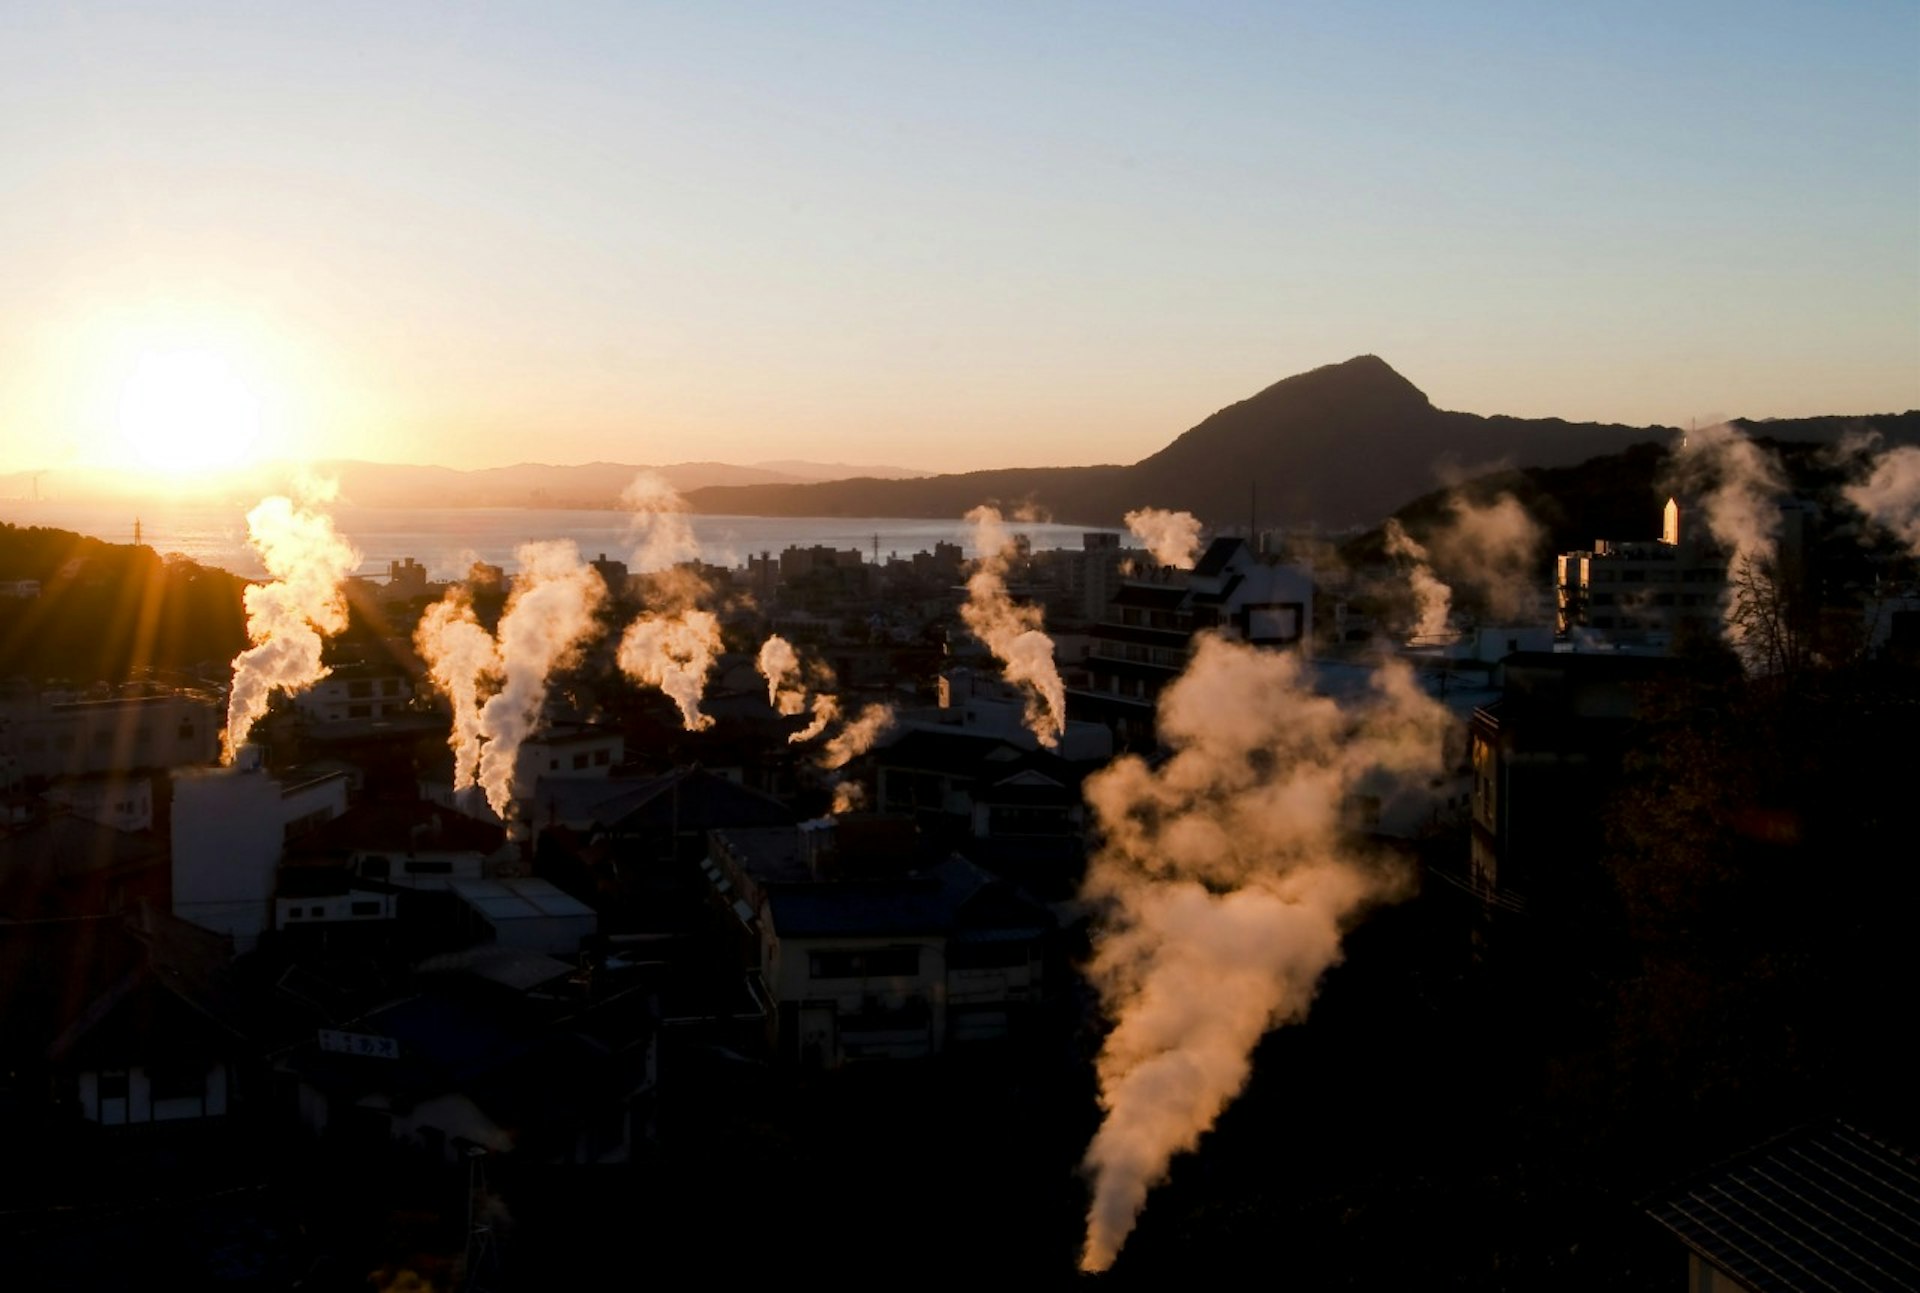 Steam rising from Beppu City at sunrise